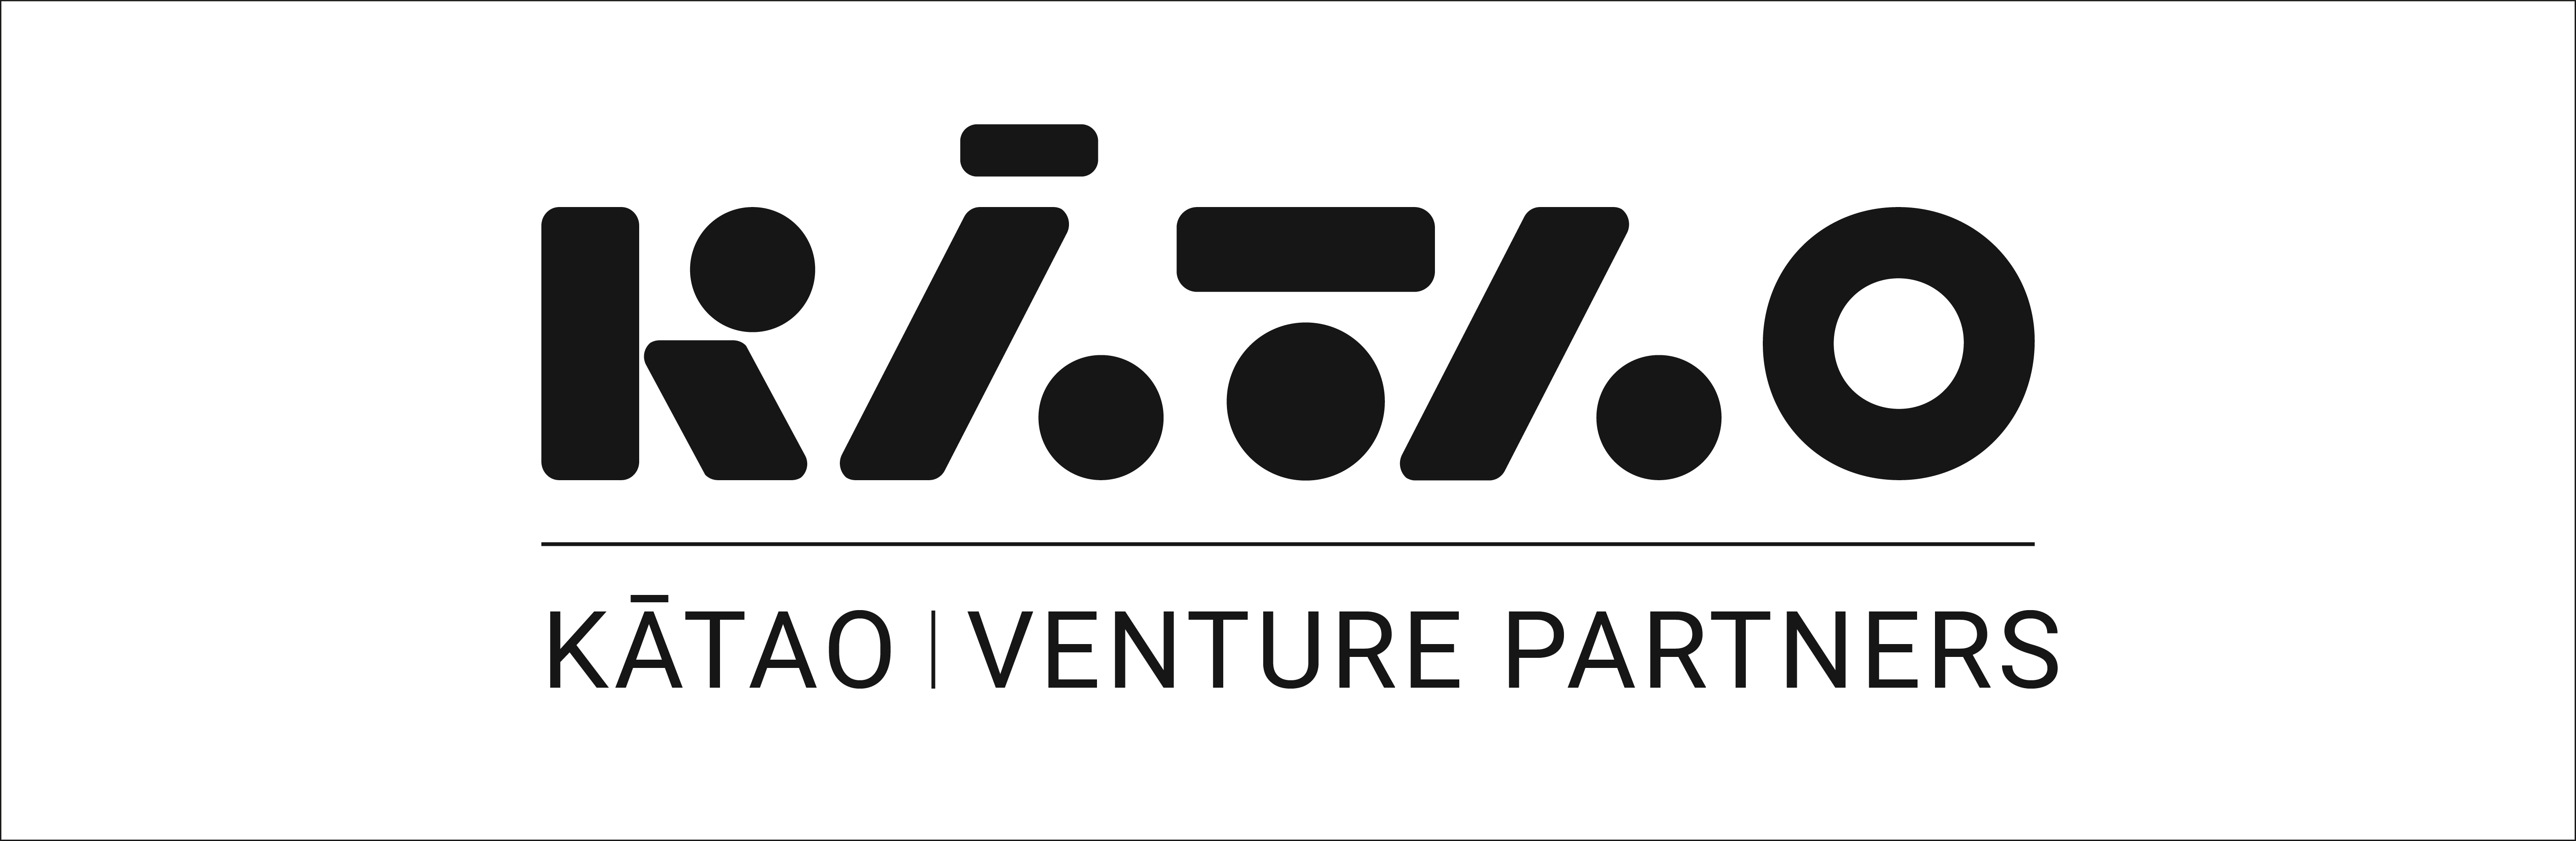 Katao Venture Partners logo